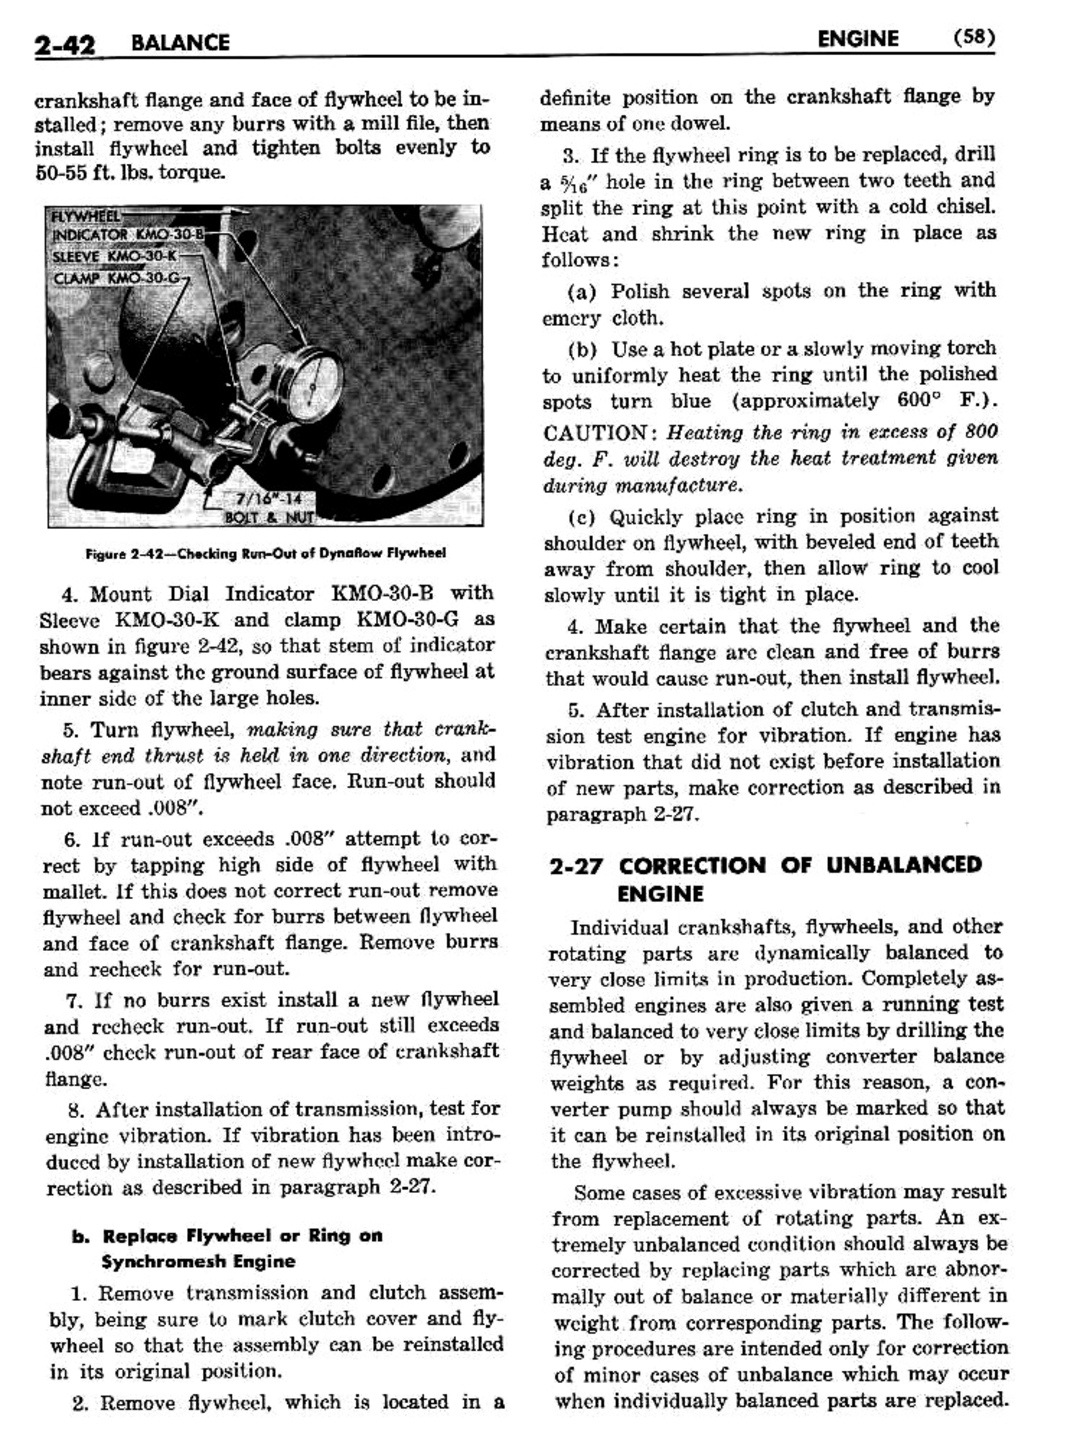 n_03 1956 Buick Shop Manual - Engine-042-042.jpg